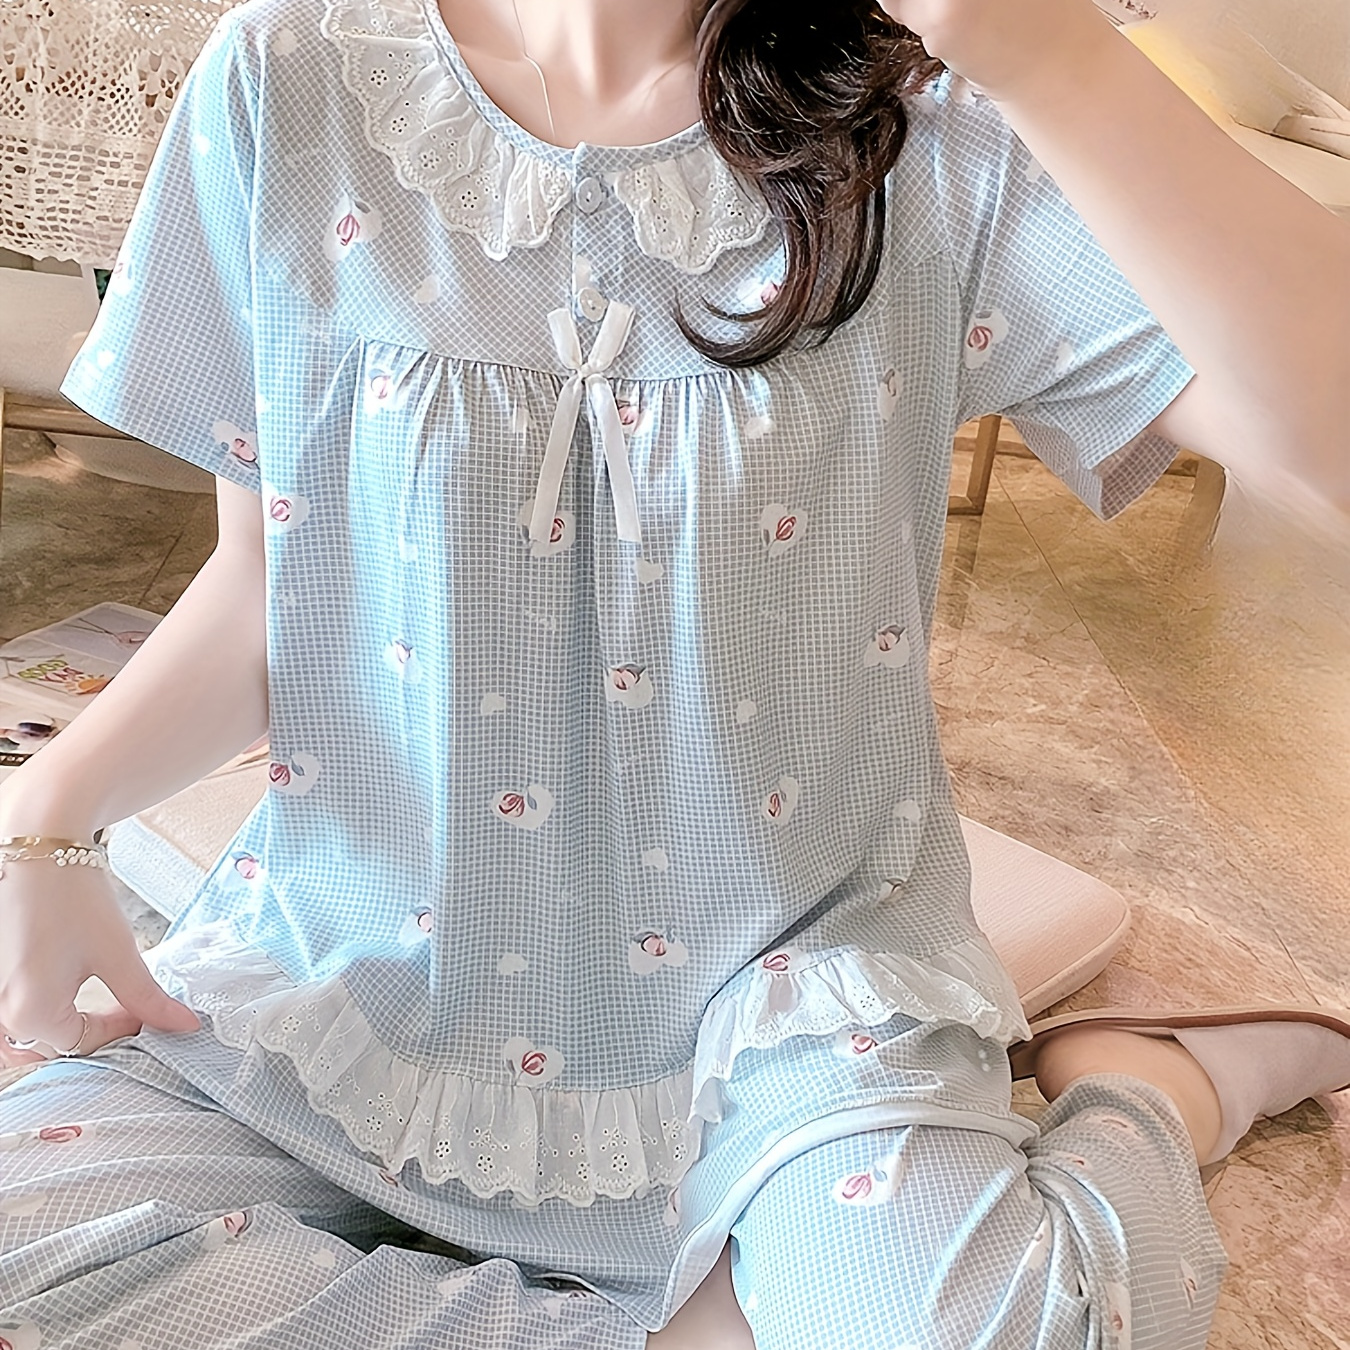 

Cute Heart Rose & Grid Print Lace Trim Pajama Set, Bow Decor Short Sleeve Crew Neck Top & Elastic Pants, Women's Sleepwear & Loungewear